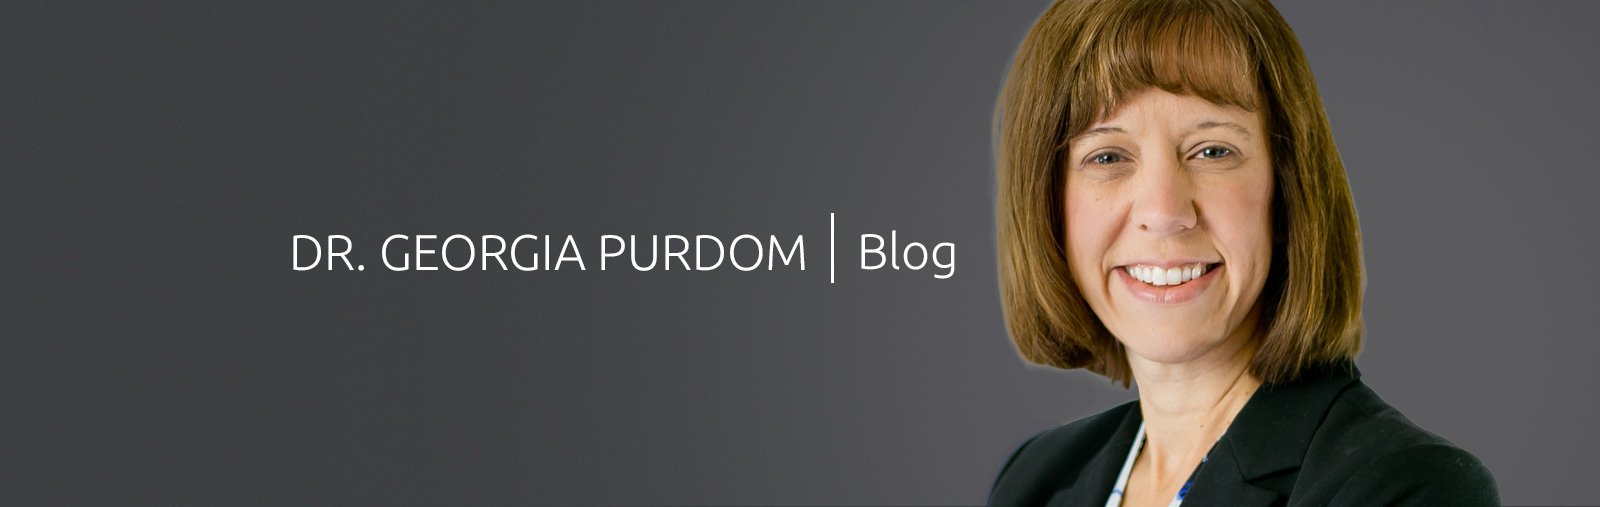 Georgia Purdom Blog